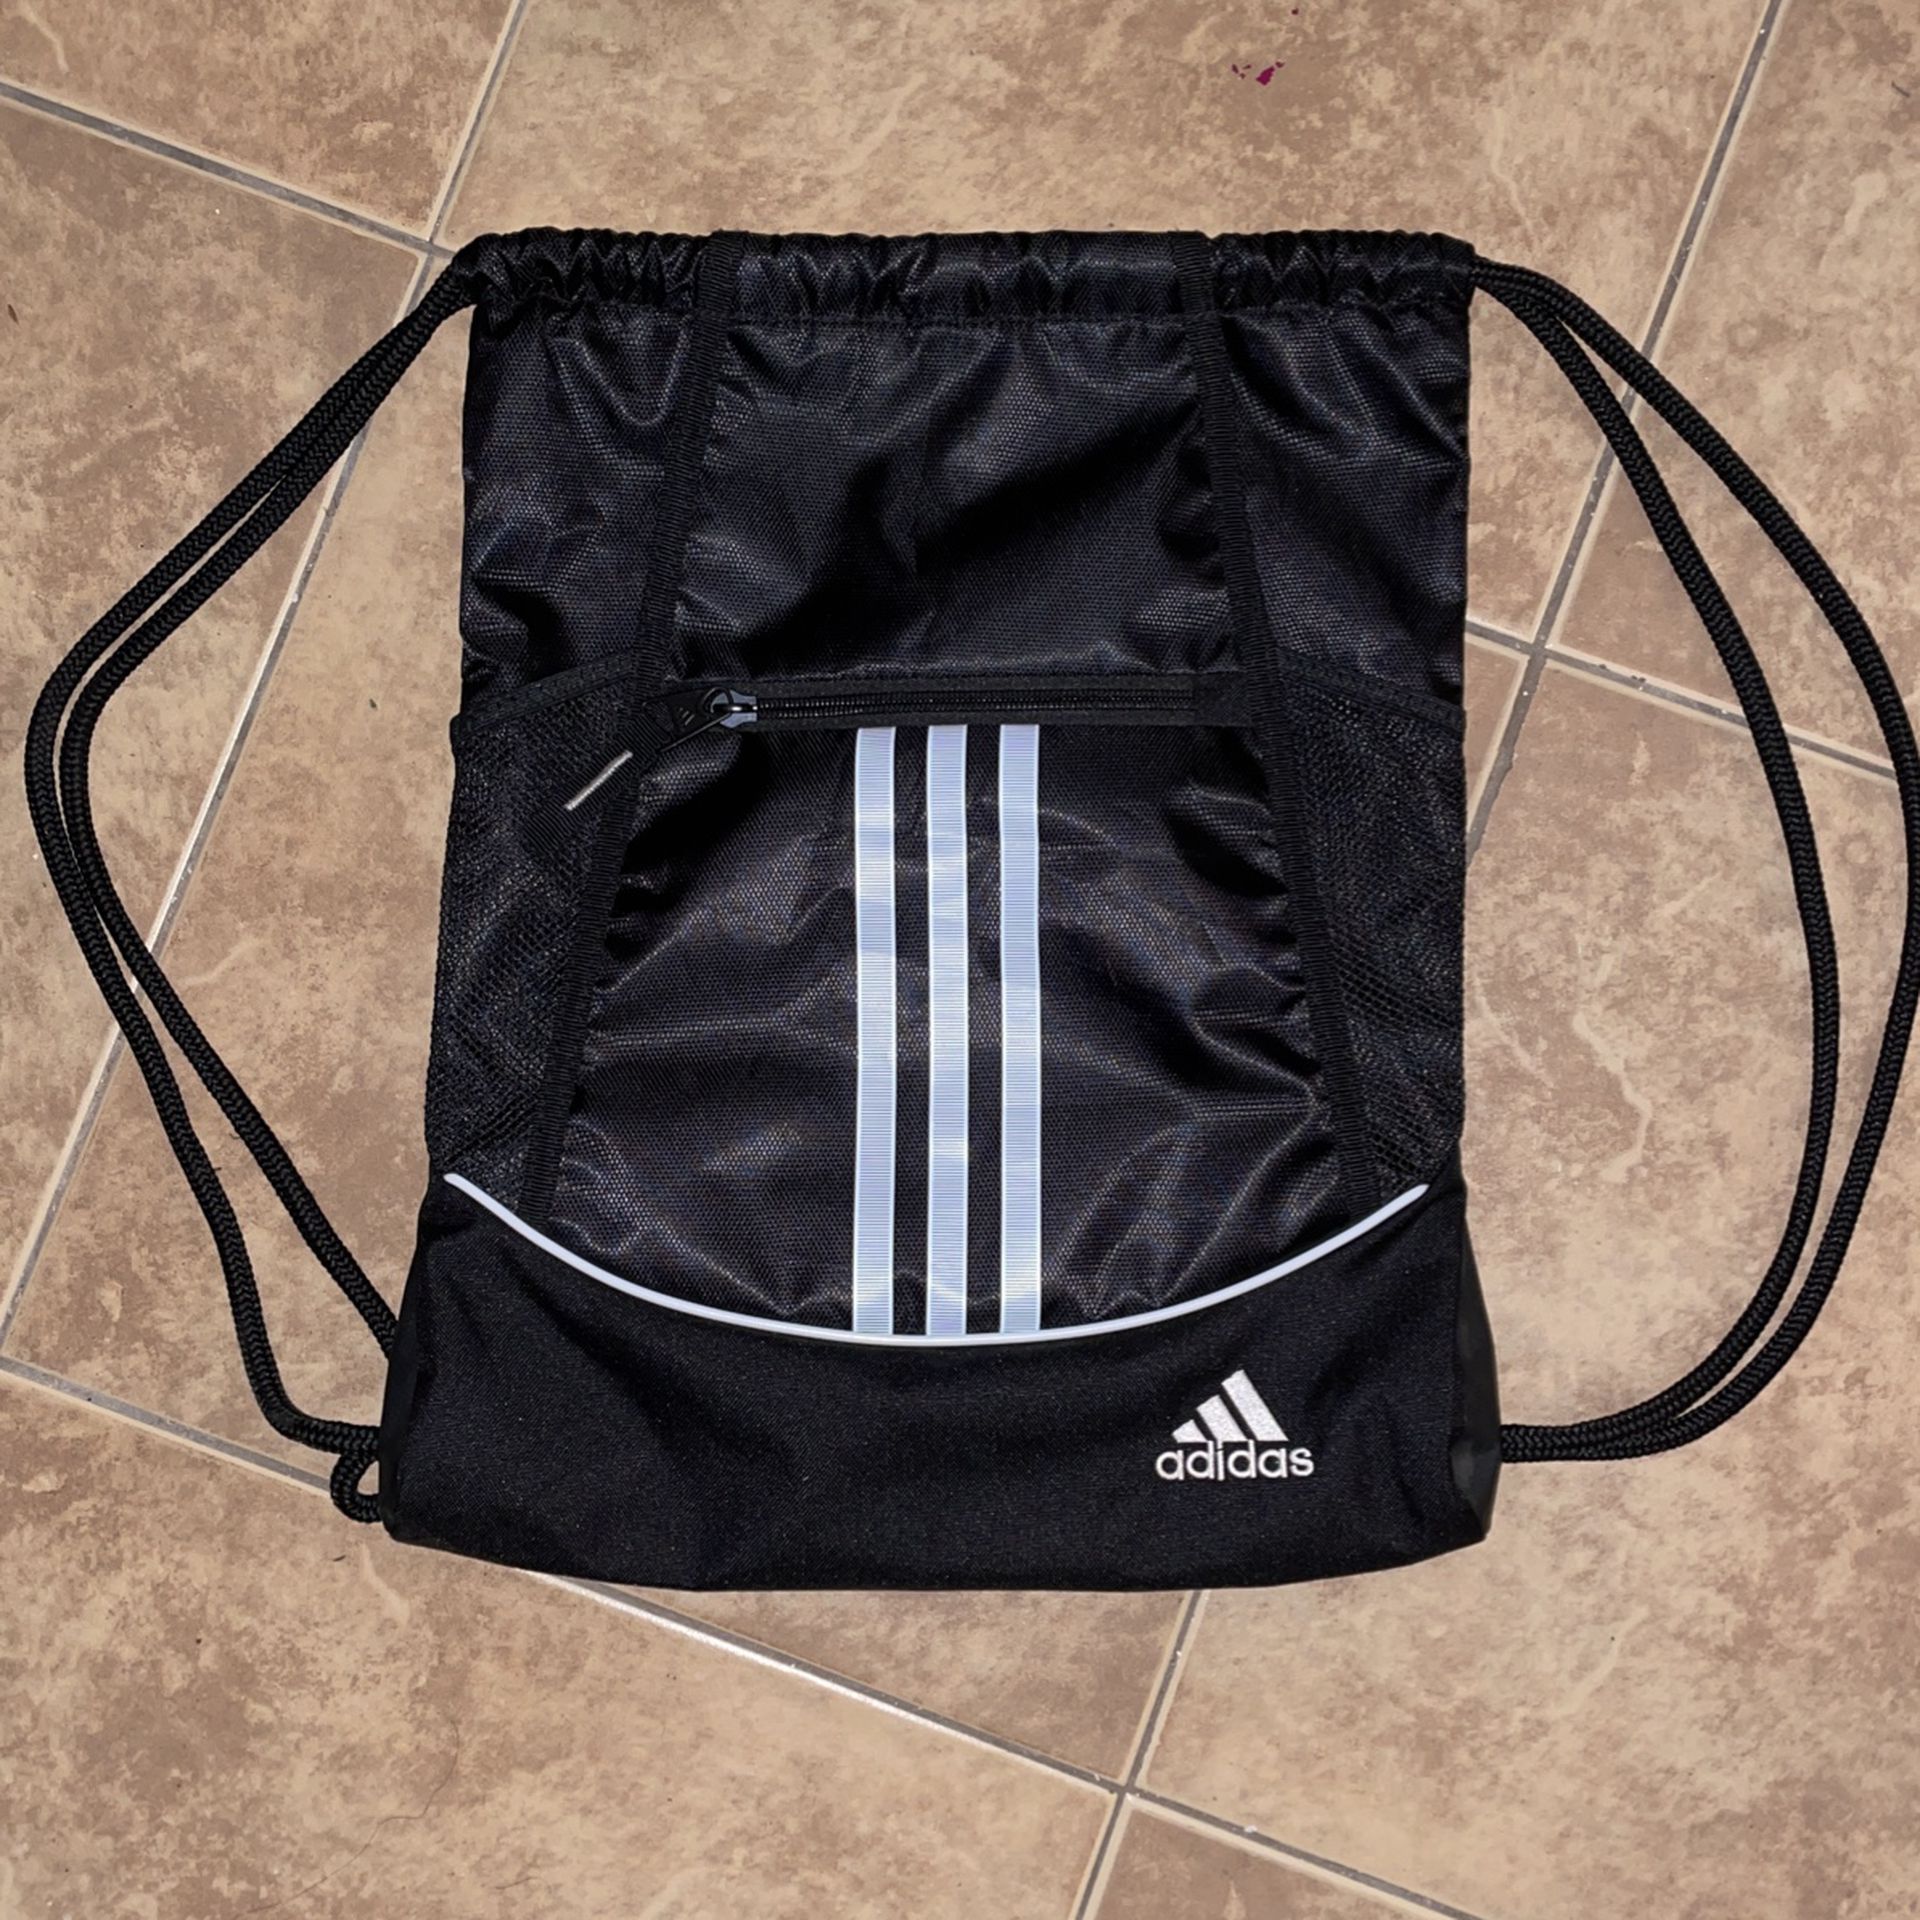 Adidas Small Sports Bag